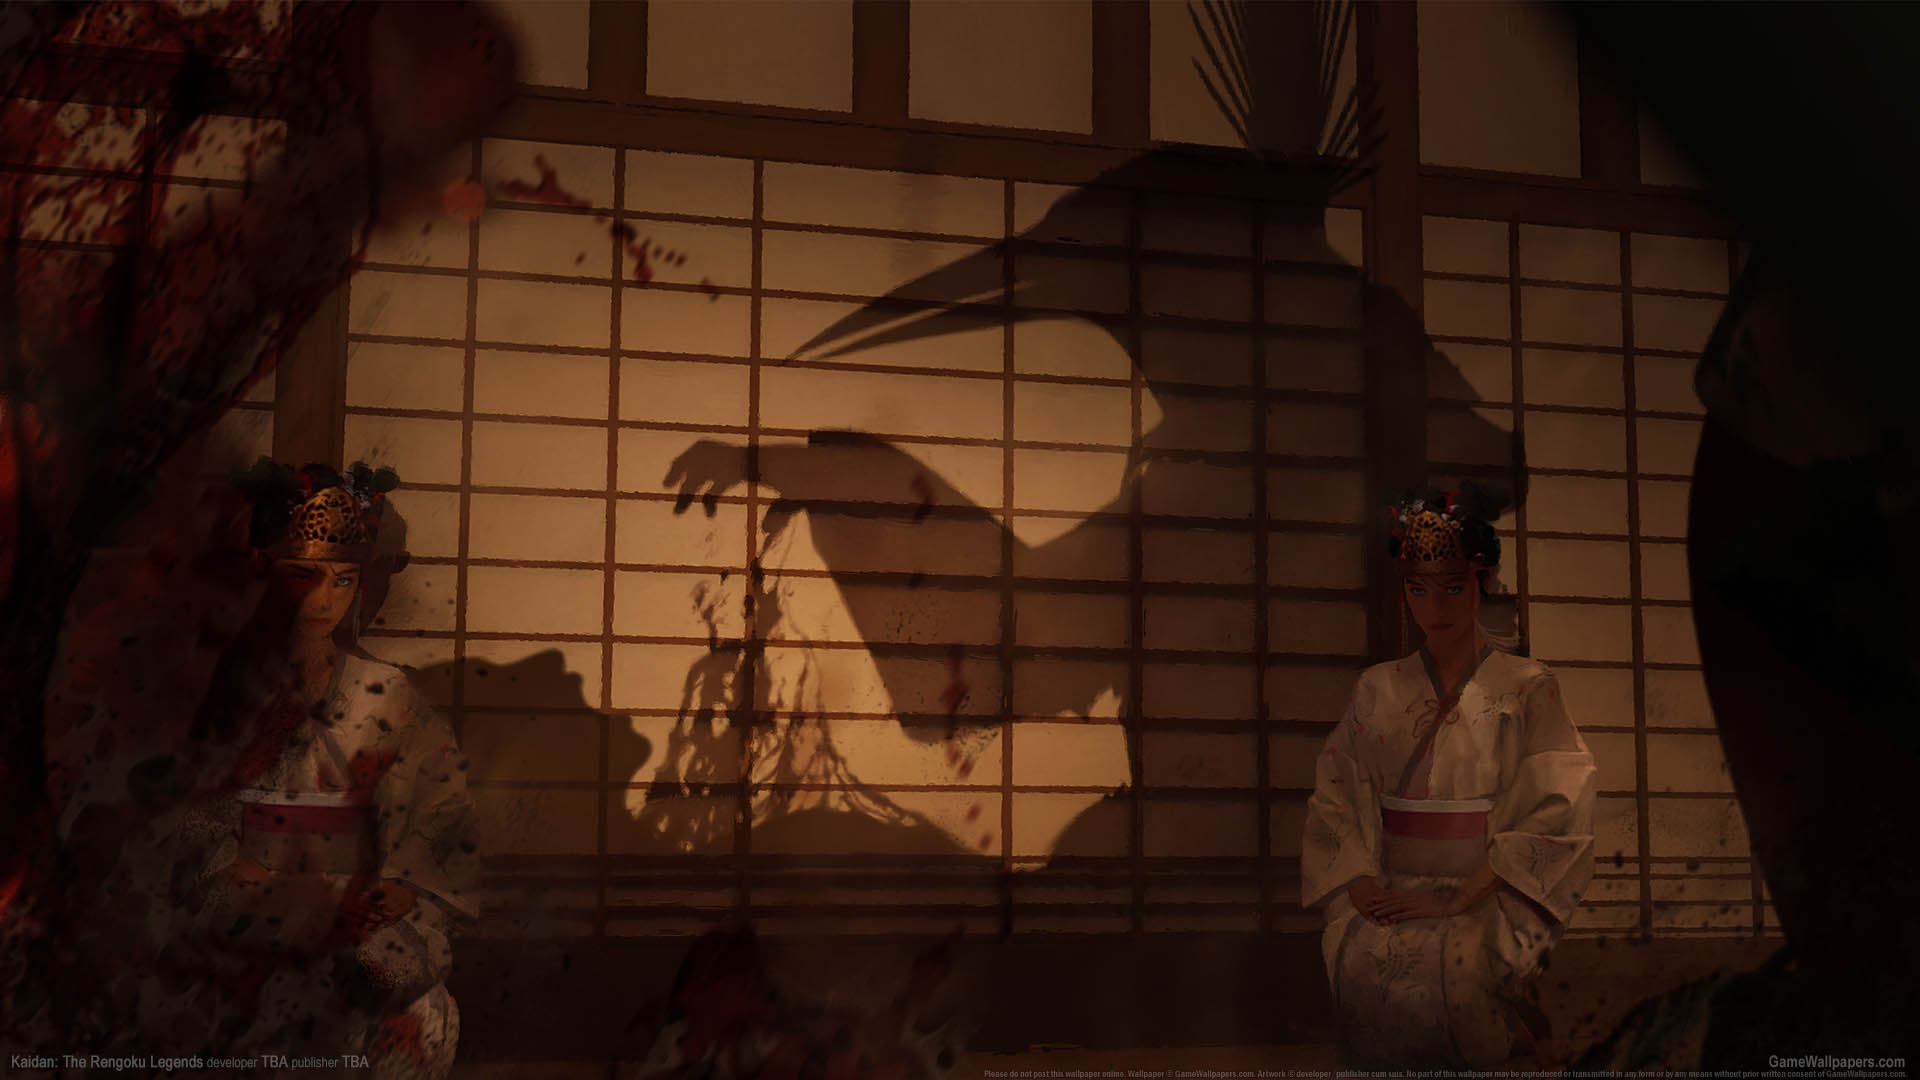 Kaidan: The Rengoku Legends wallpaper 01 1920x1080